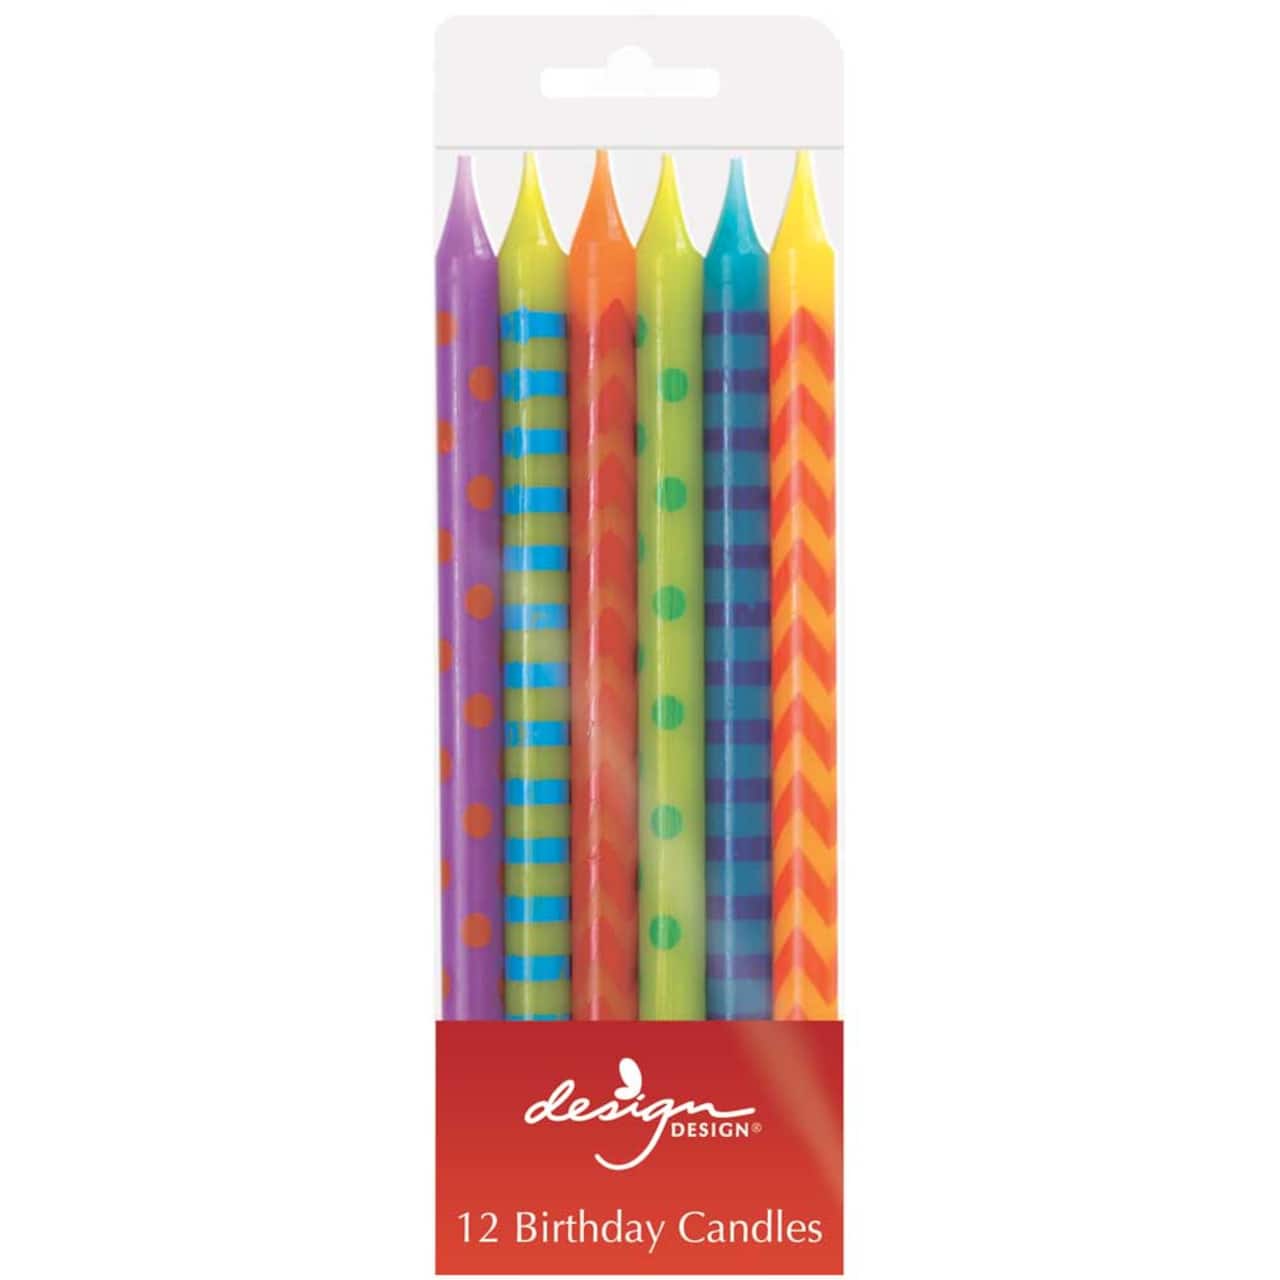 Design Design Colorful Designs Birthday Candle Sticks Set